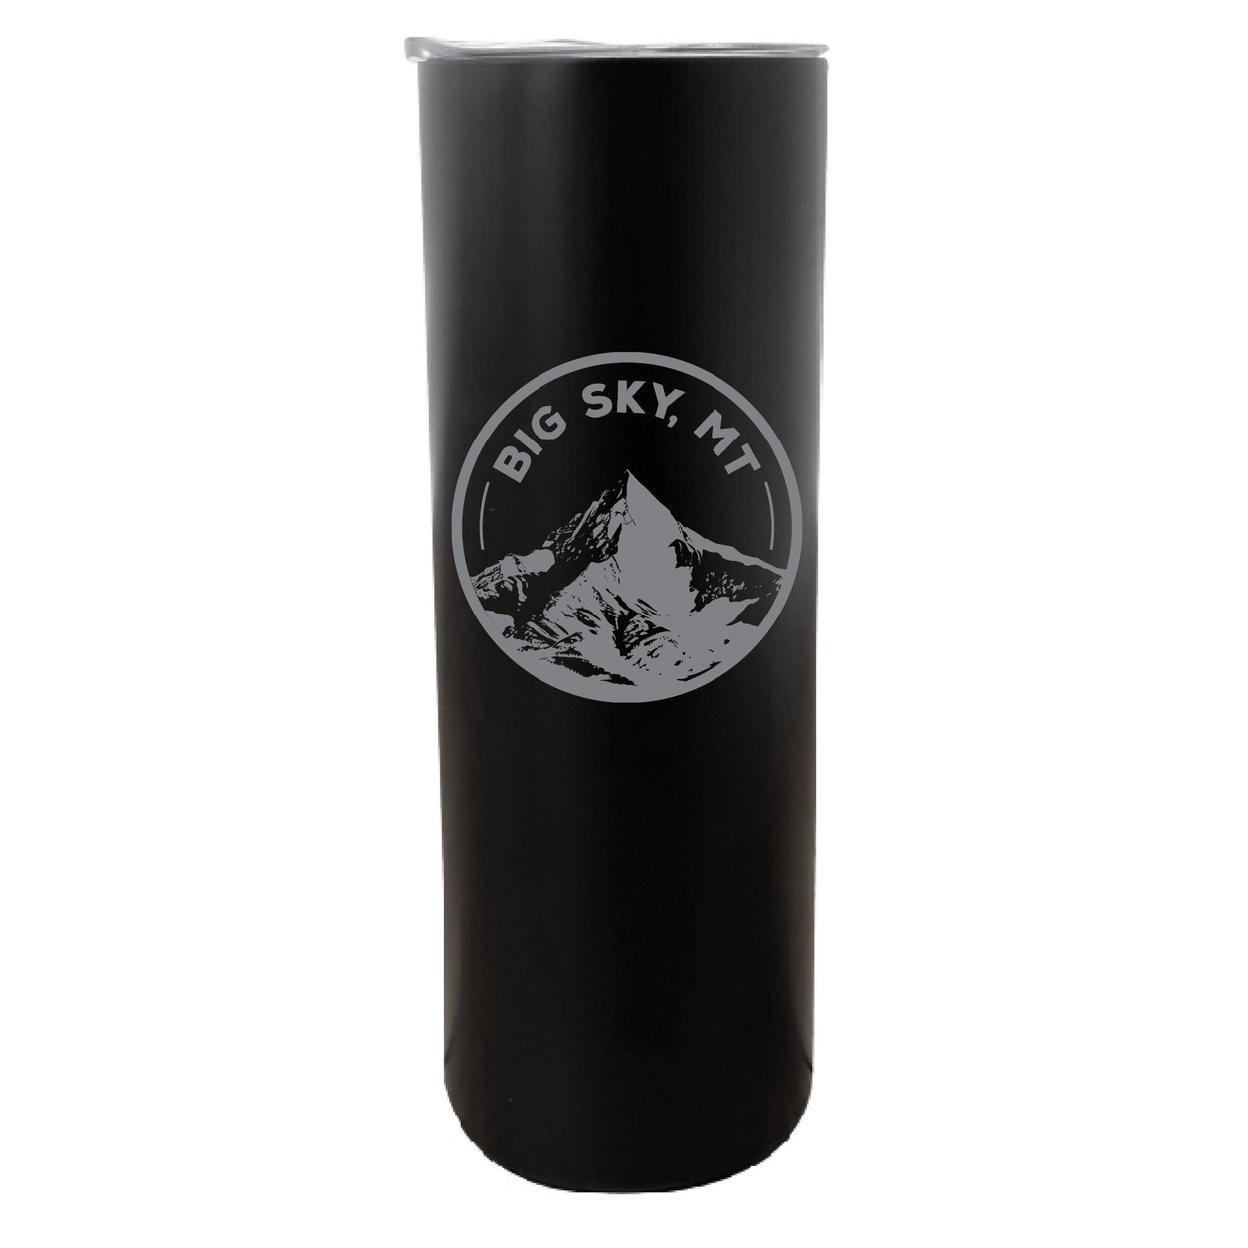 Big Sky Montana Souvenir 20 Oz Engraved Insulated Stainless Steel Skinny Tumbler - Black,,Single Unit